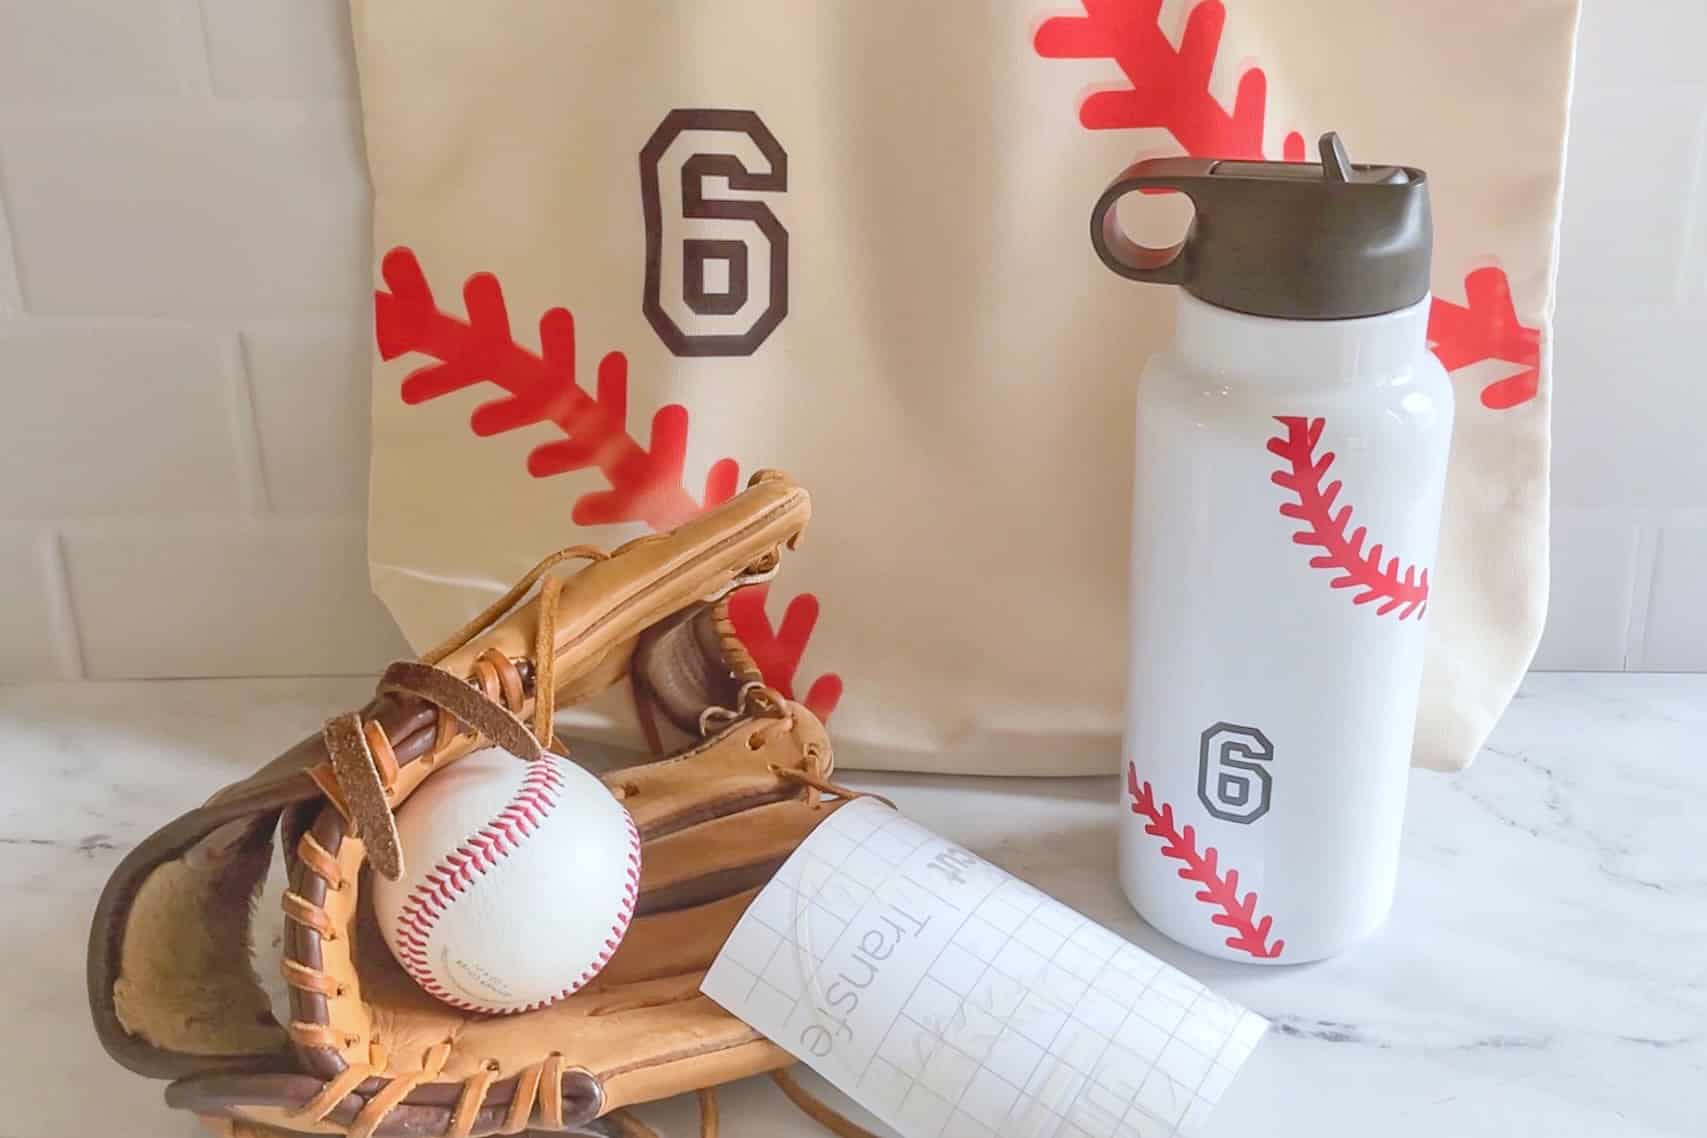 Baseball fan gifts (DIY baseball gifts made with Cricut)